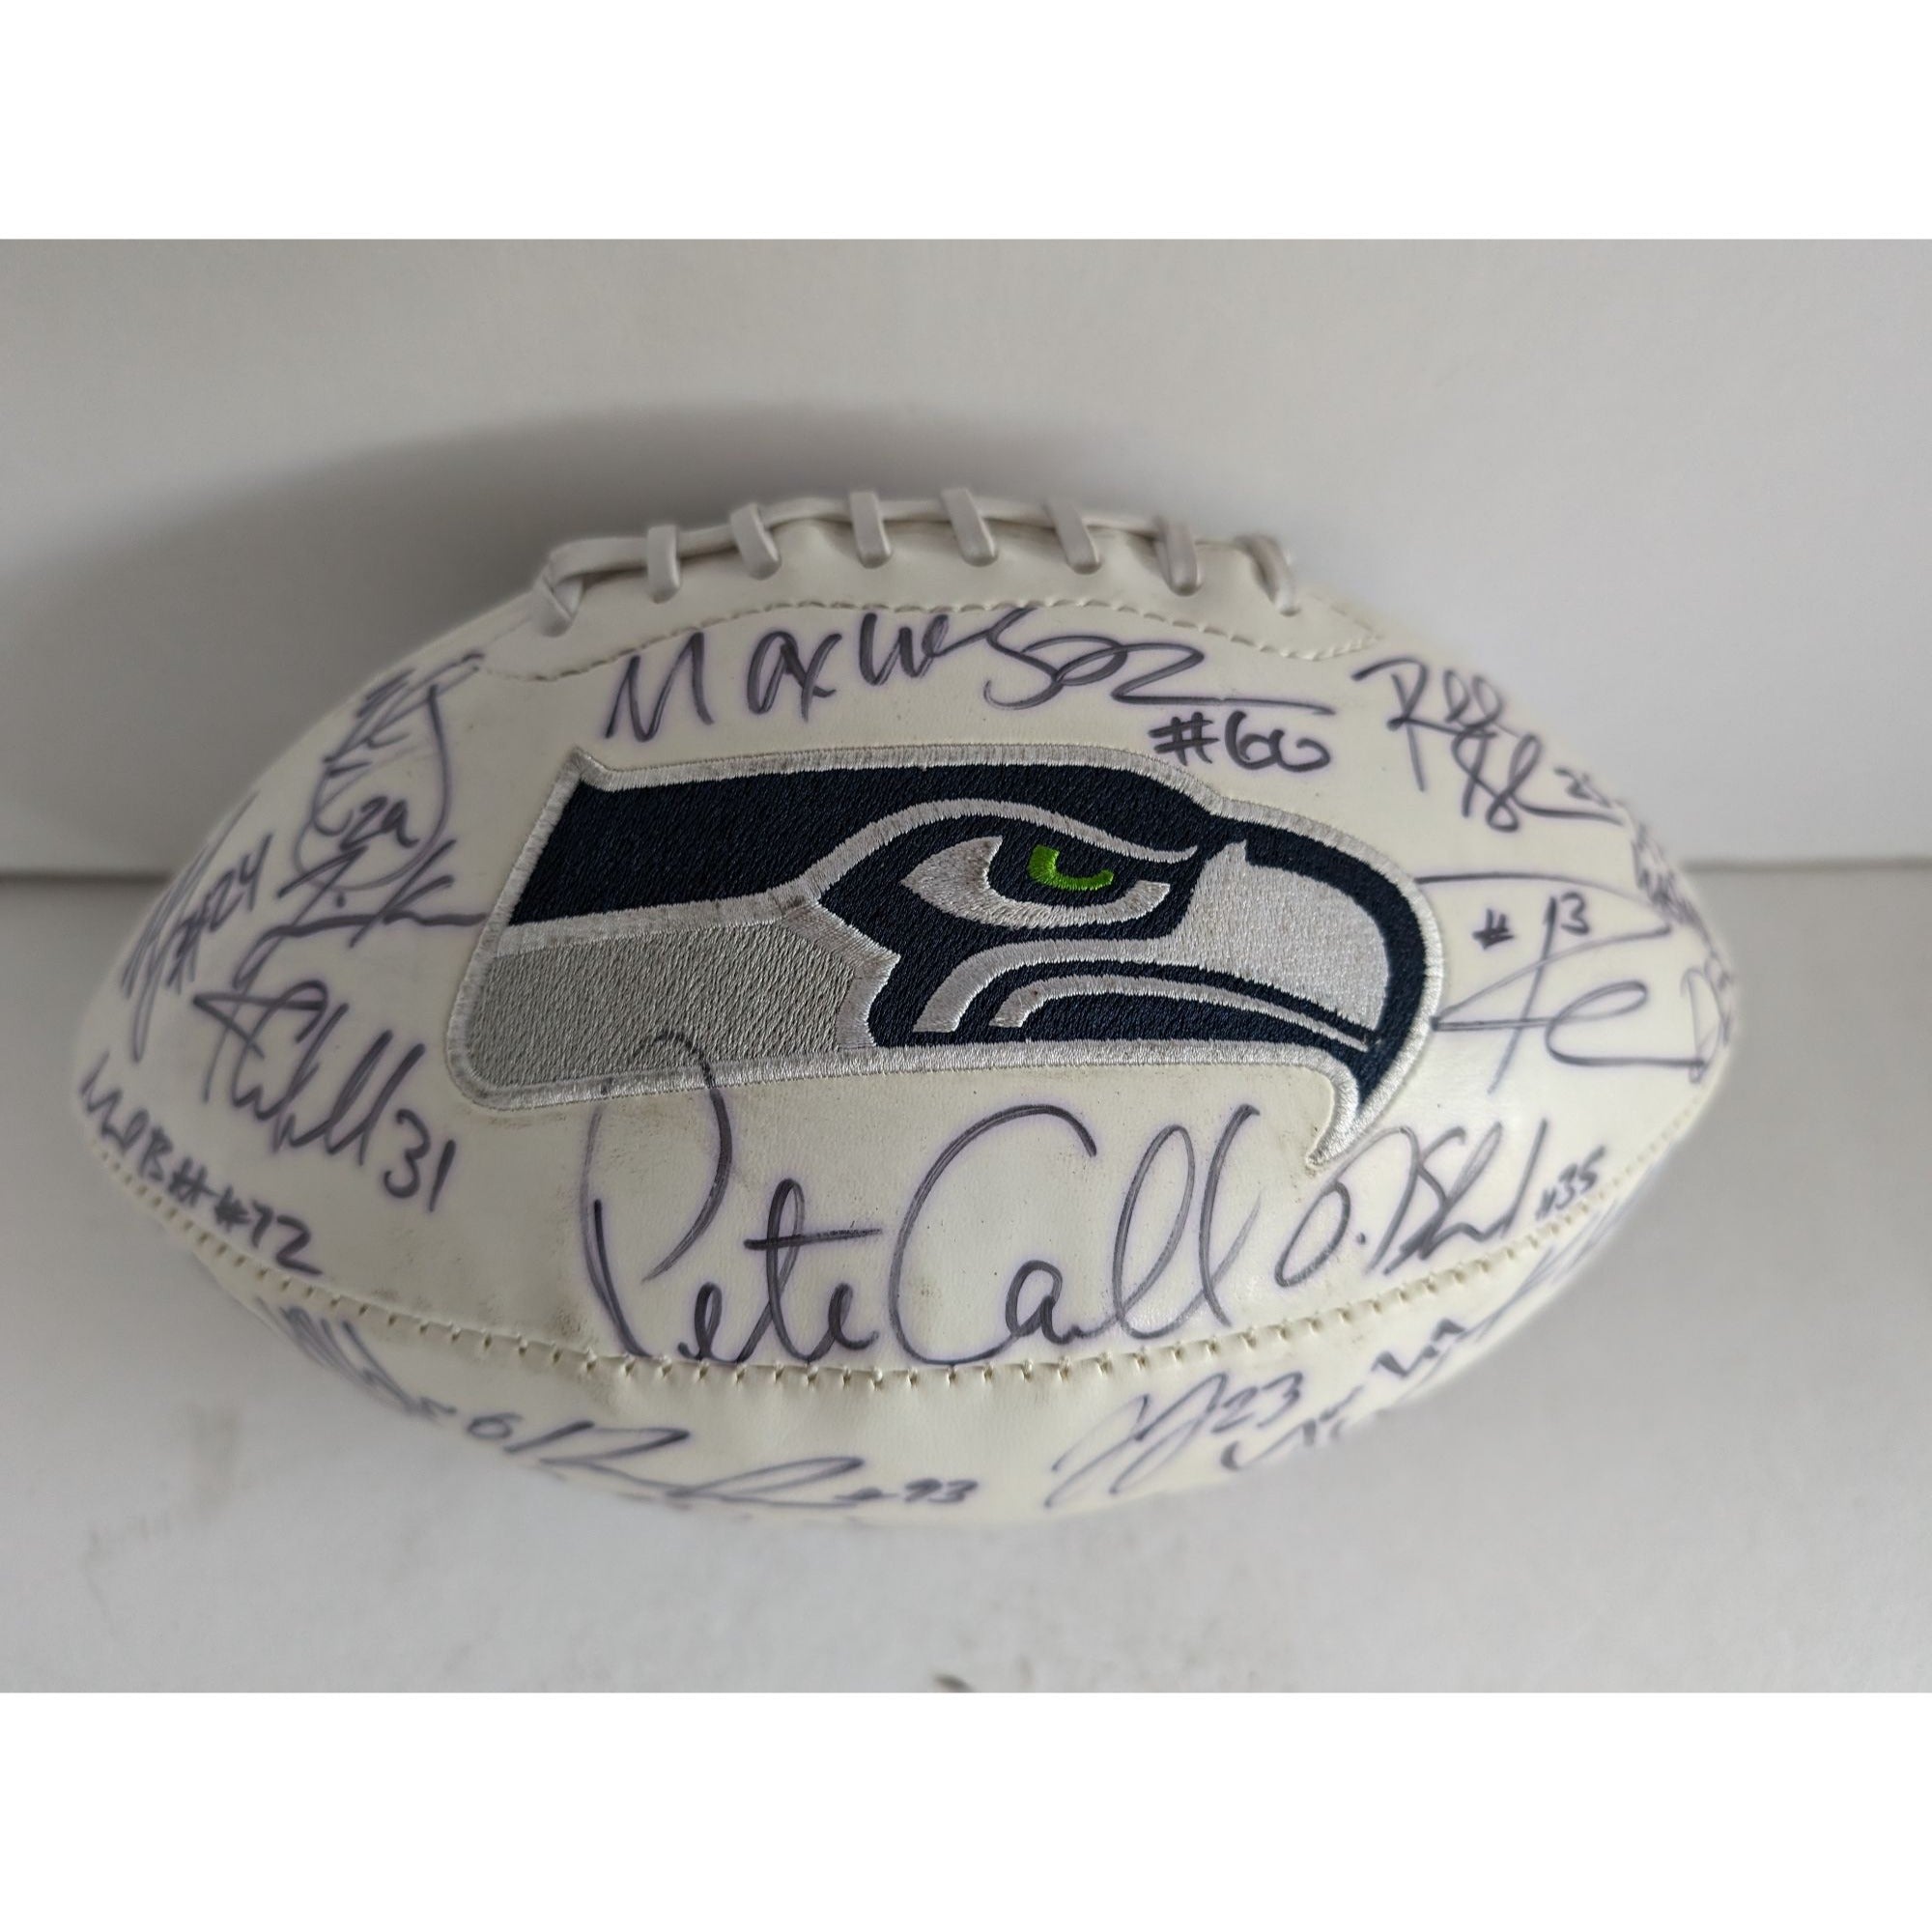 Seattle Seahawks Marshawn Lynch Russell Wilson Richard Sherman Bobby Wagner Super Bowl champions team signed football